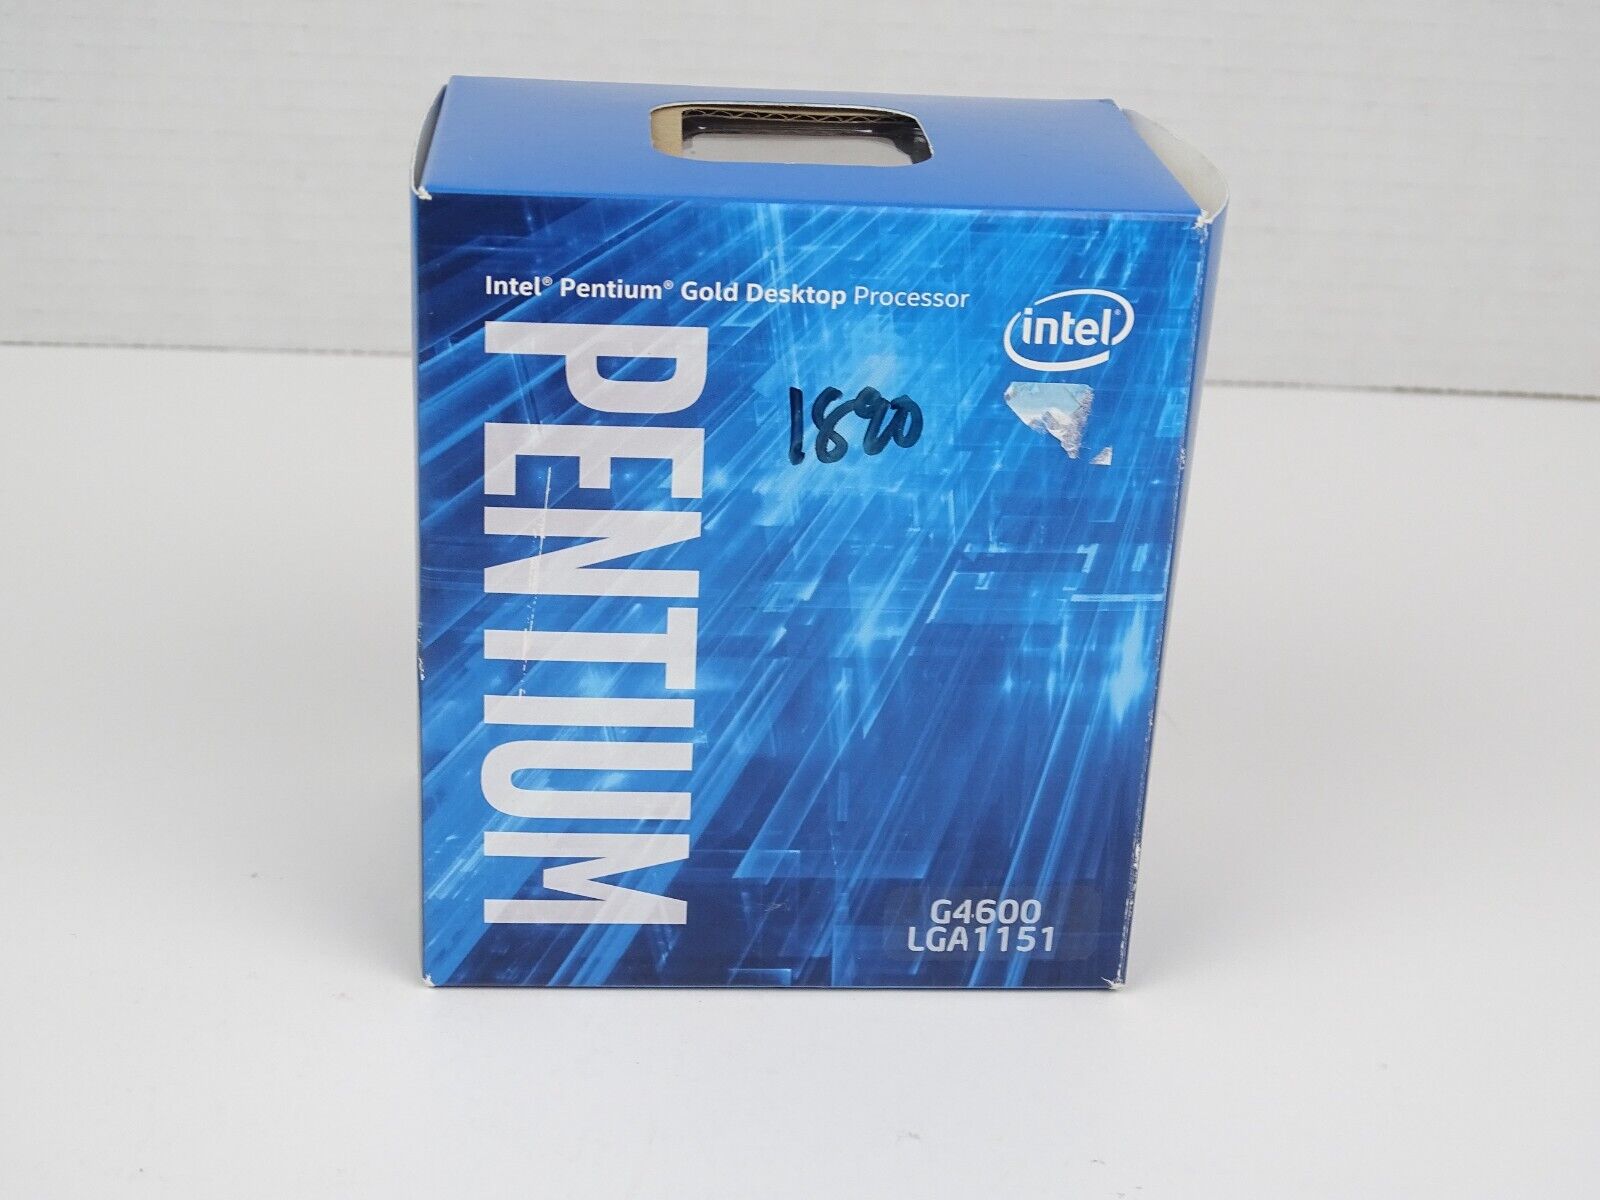 Intel Pentium G4600 LGA 1151 51W 3.6 GHz - New - Open Box